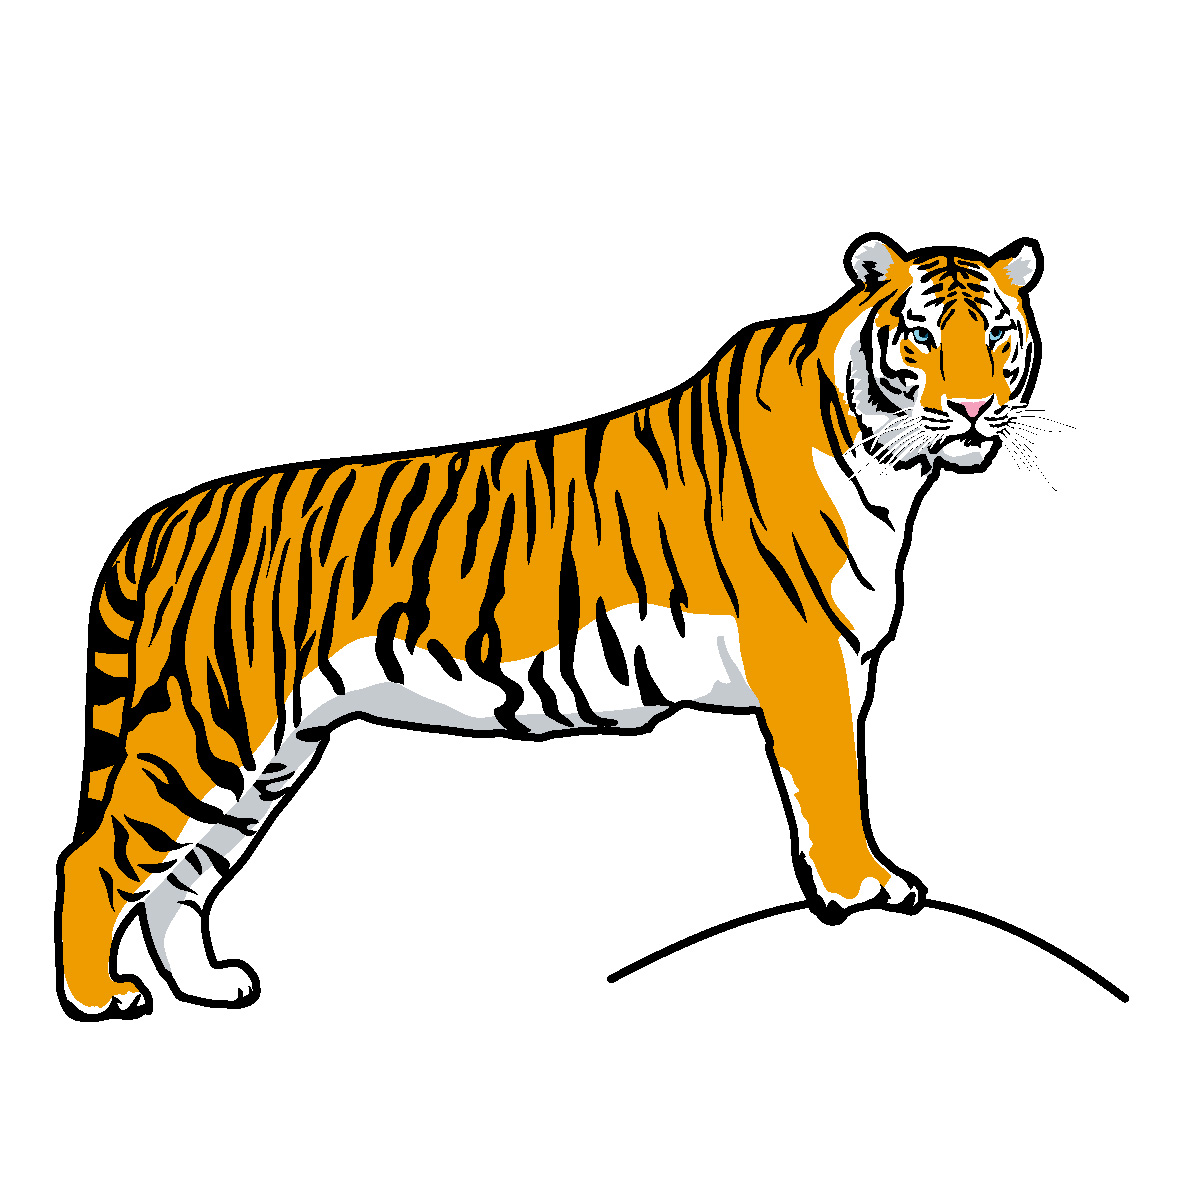 Tiger clip art images free .